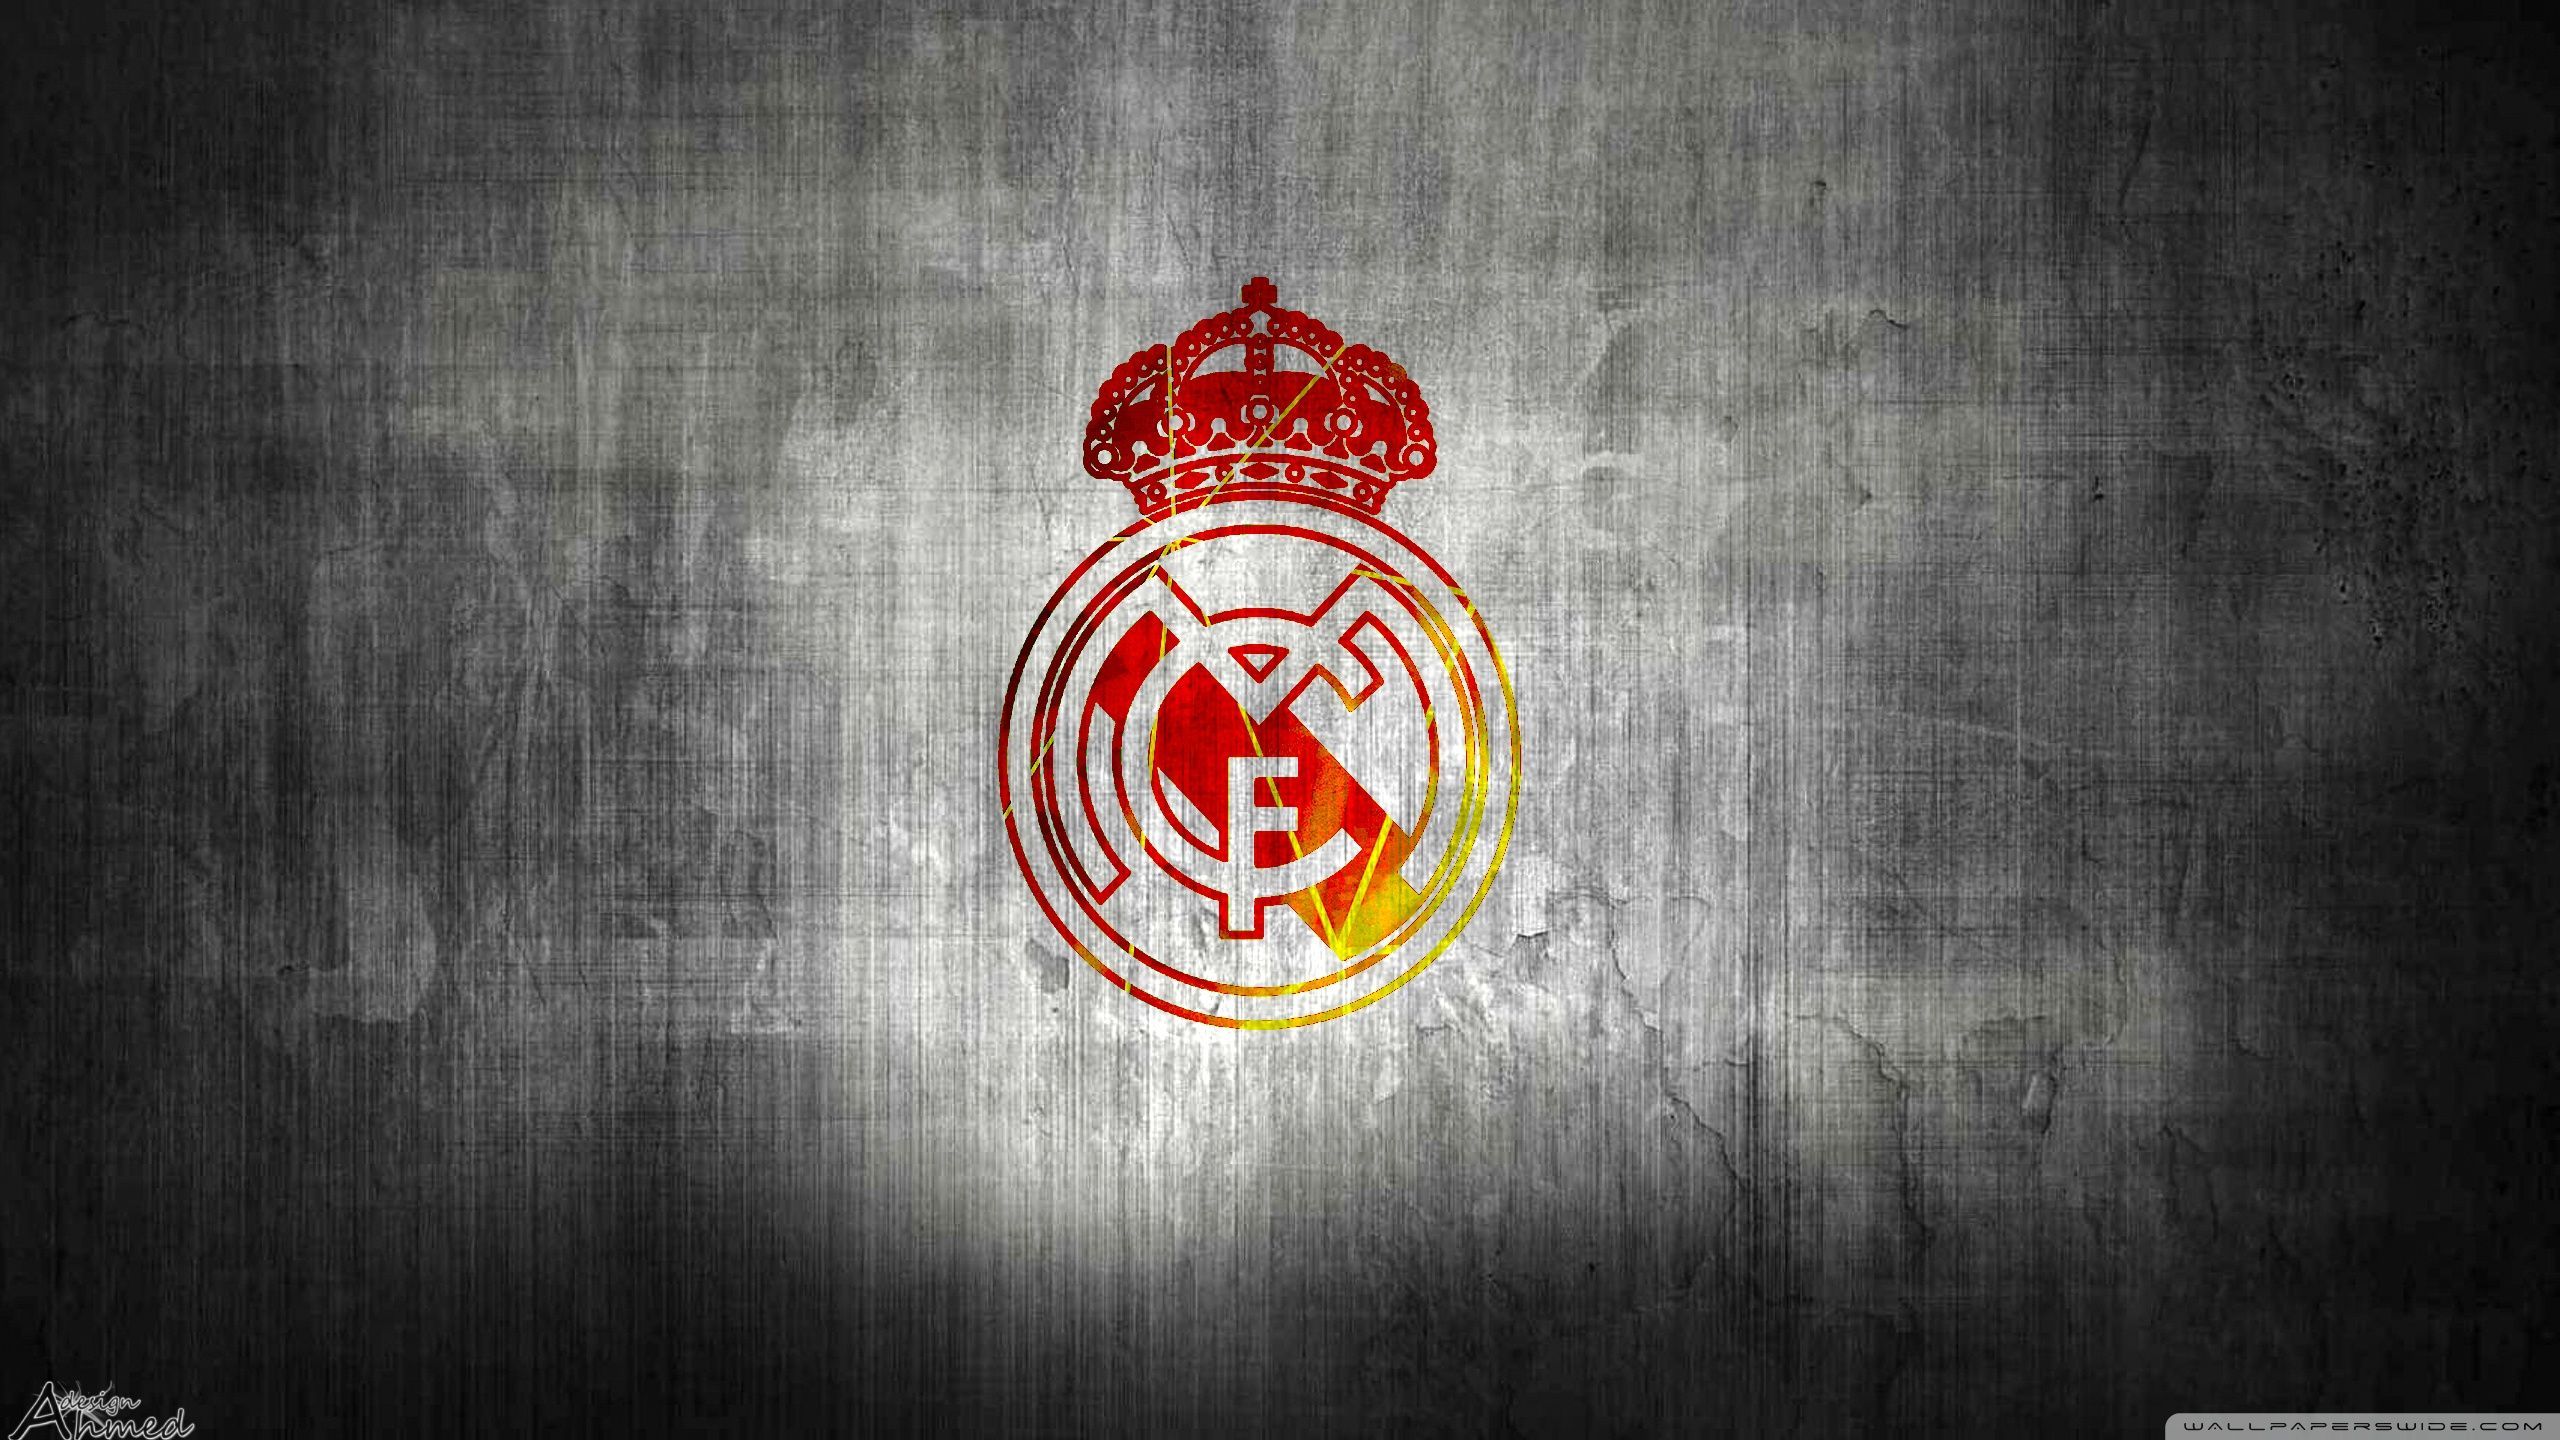 Real Madrid Cf Wallpaper HD. Real madrid wallpaper, Madrid wallpaper, Real madrid logo wallpaper